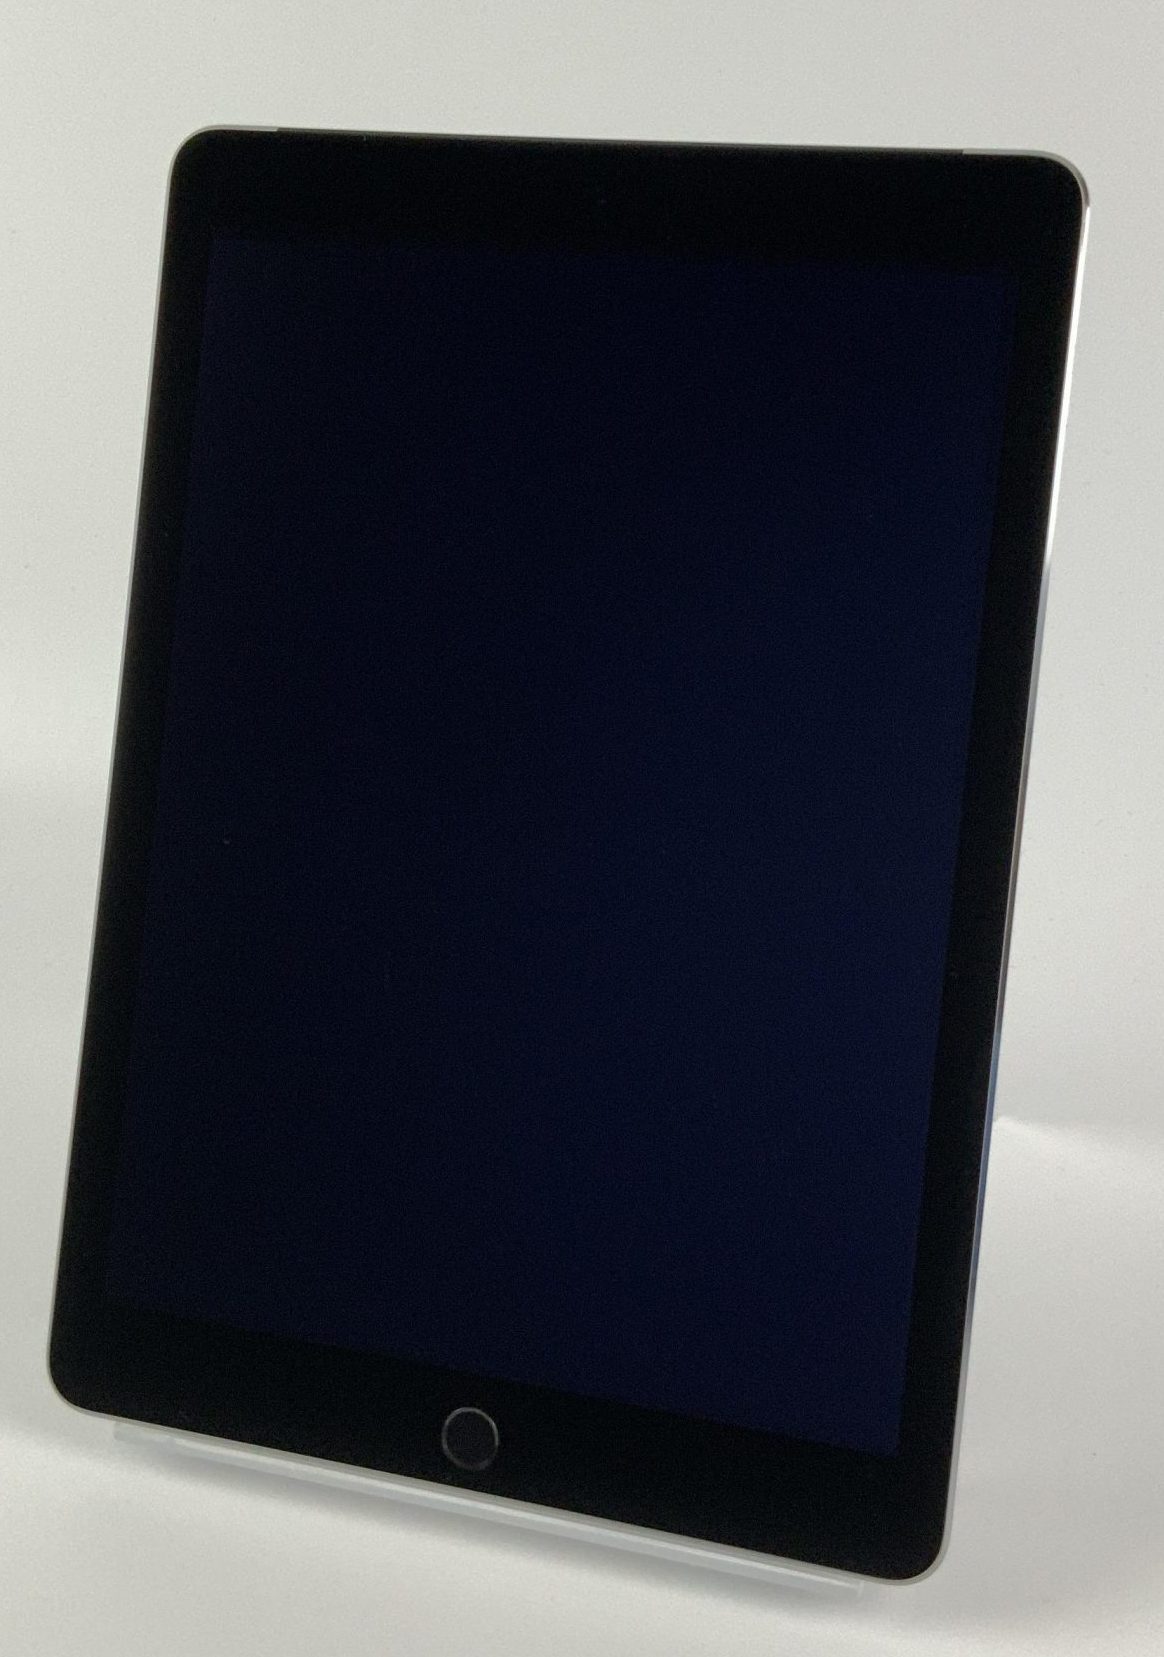 iPad Air 2 Wi-Fi + Cellular 16GB, 16GB, Space Gray, bild 1